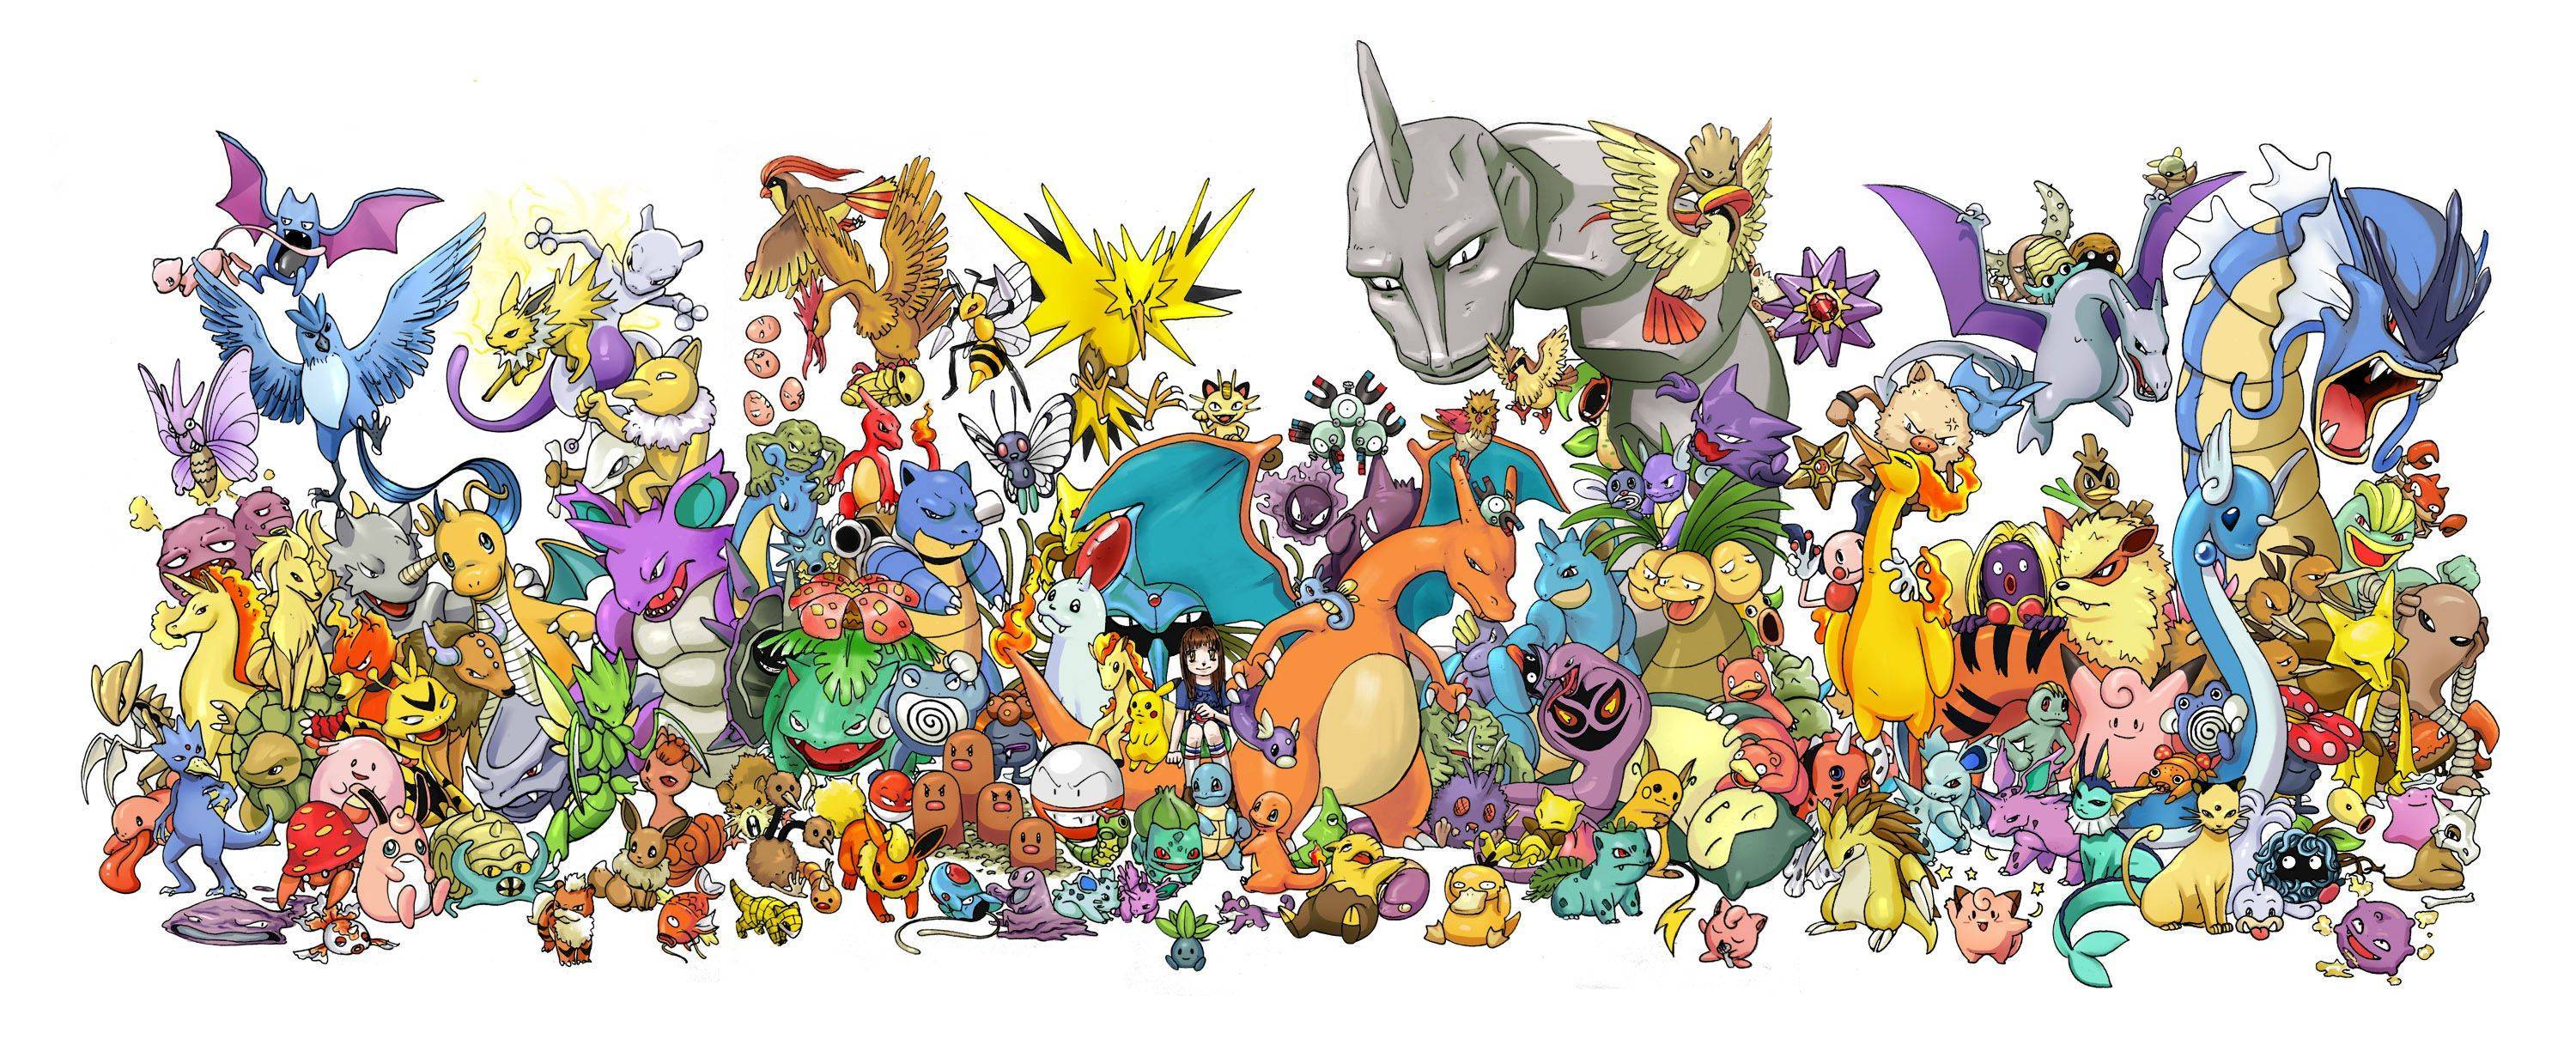 Hình nền Pokemon 3000x1210 - Wallpapercraft